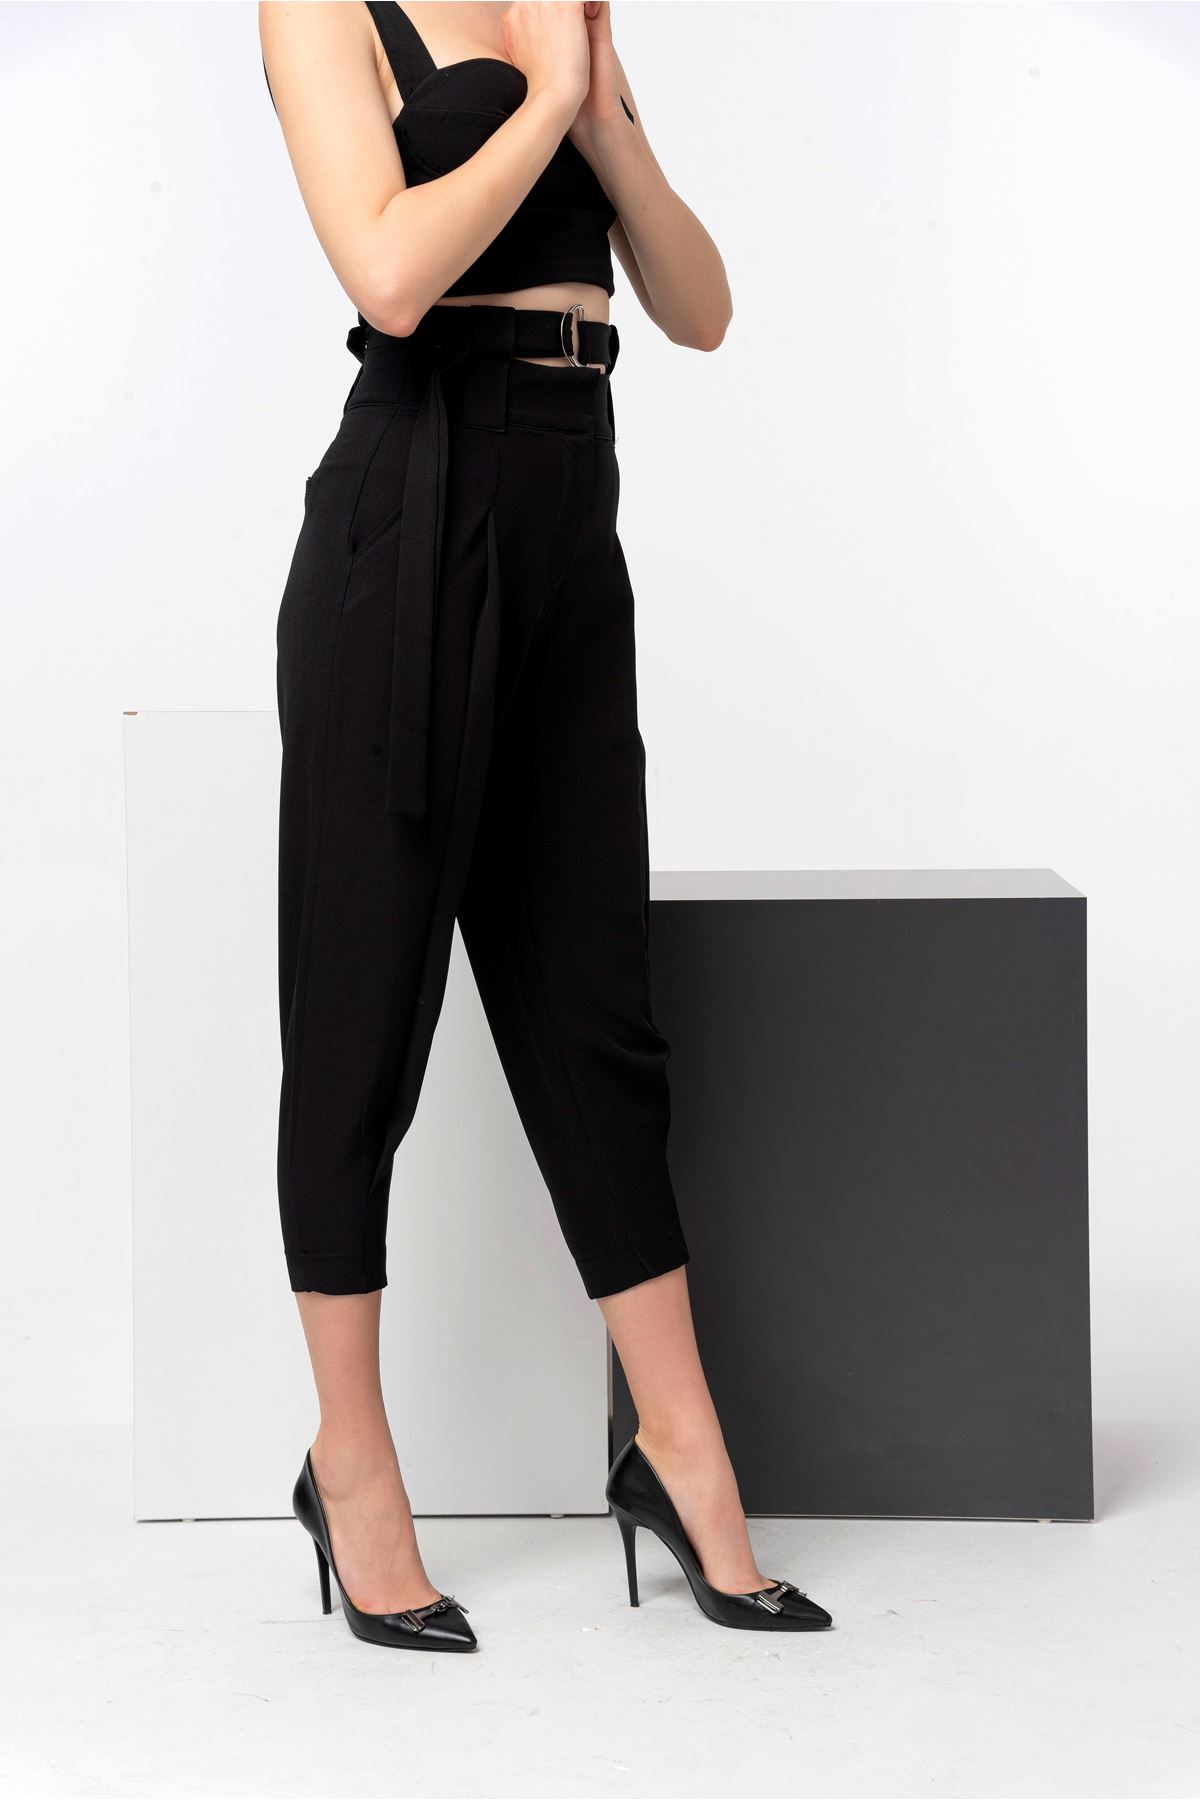 Atlas Fabric Carrot Style Button Women'S Trouser - Black